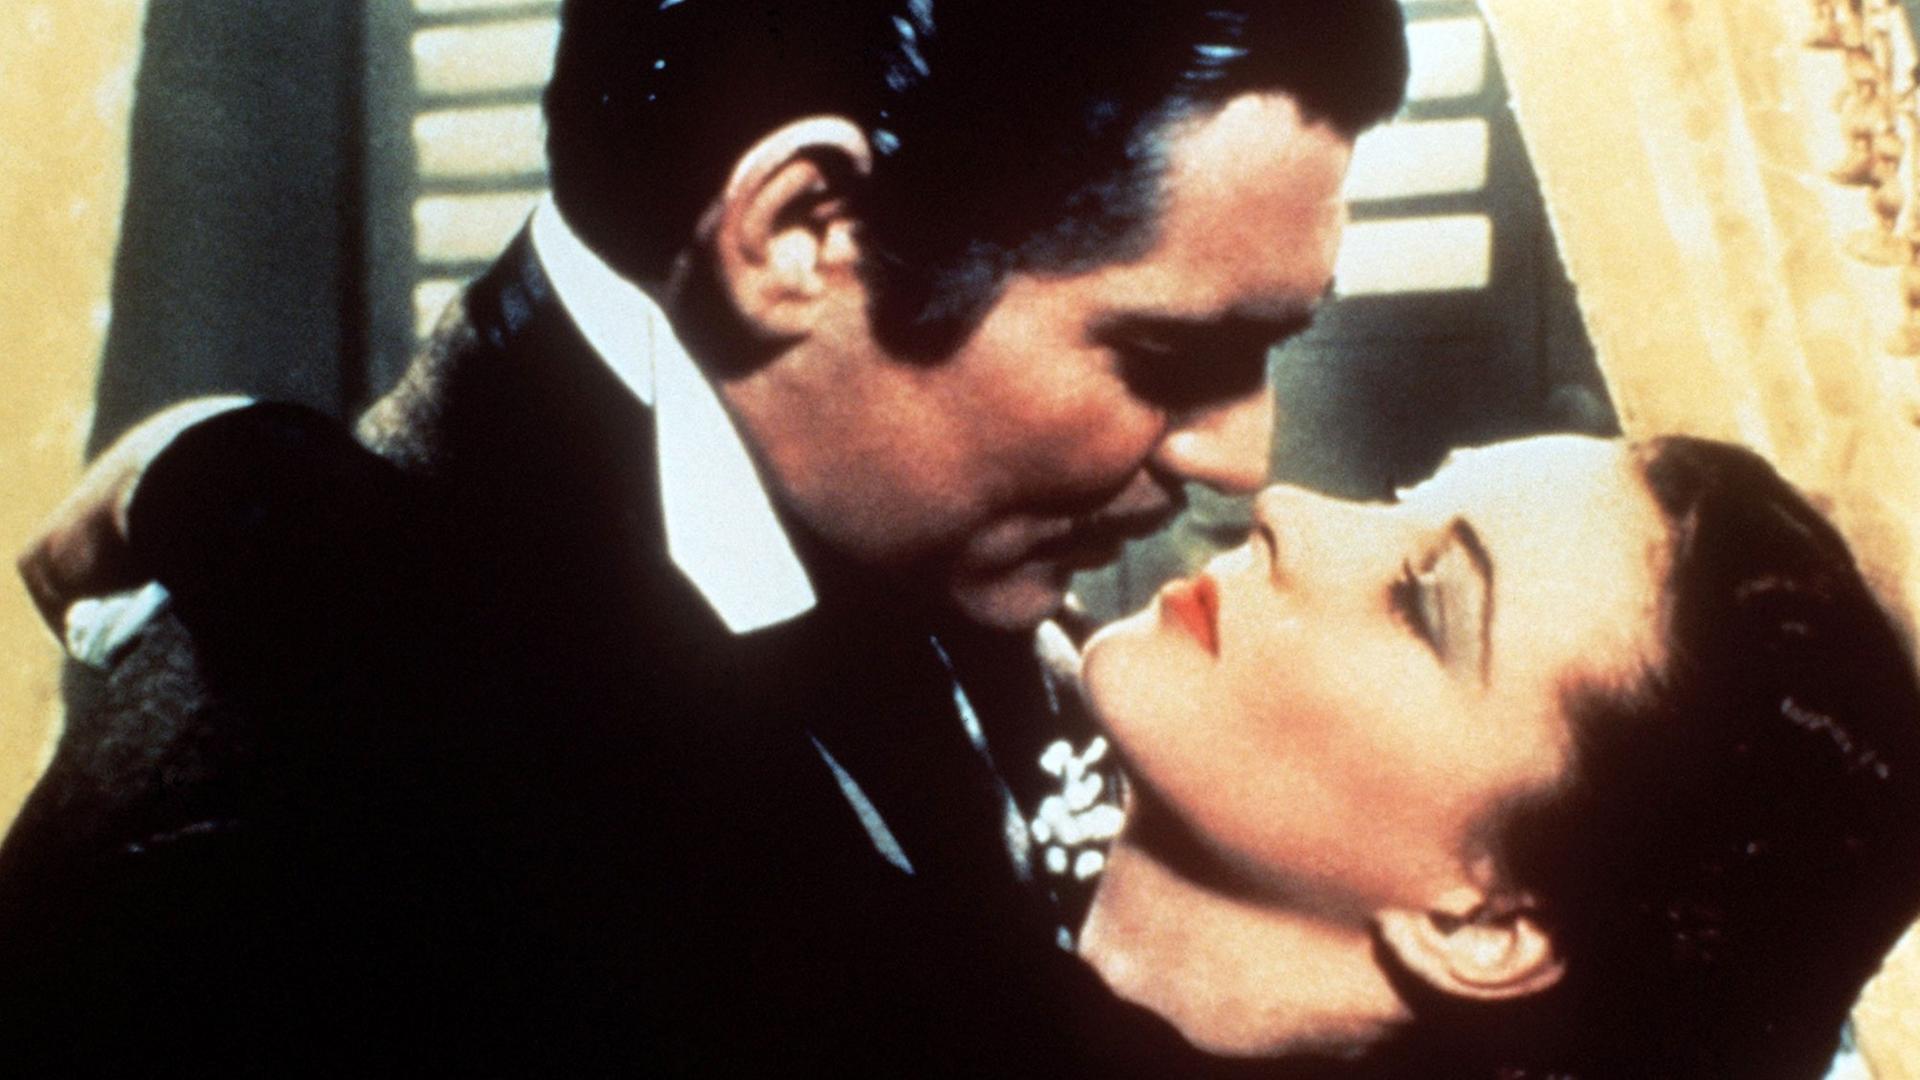 Rhett Butler (Clark Gable) umarmt in dem Filmklassiker "Vom Winde verweht" von 1939 Scarlett O'Hara (Vivian Leigh).